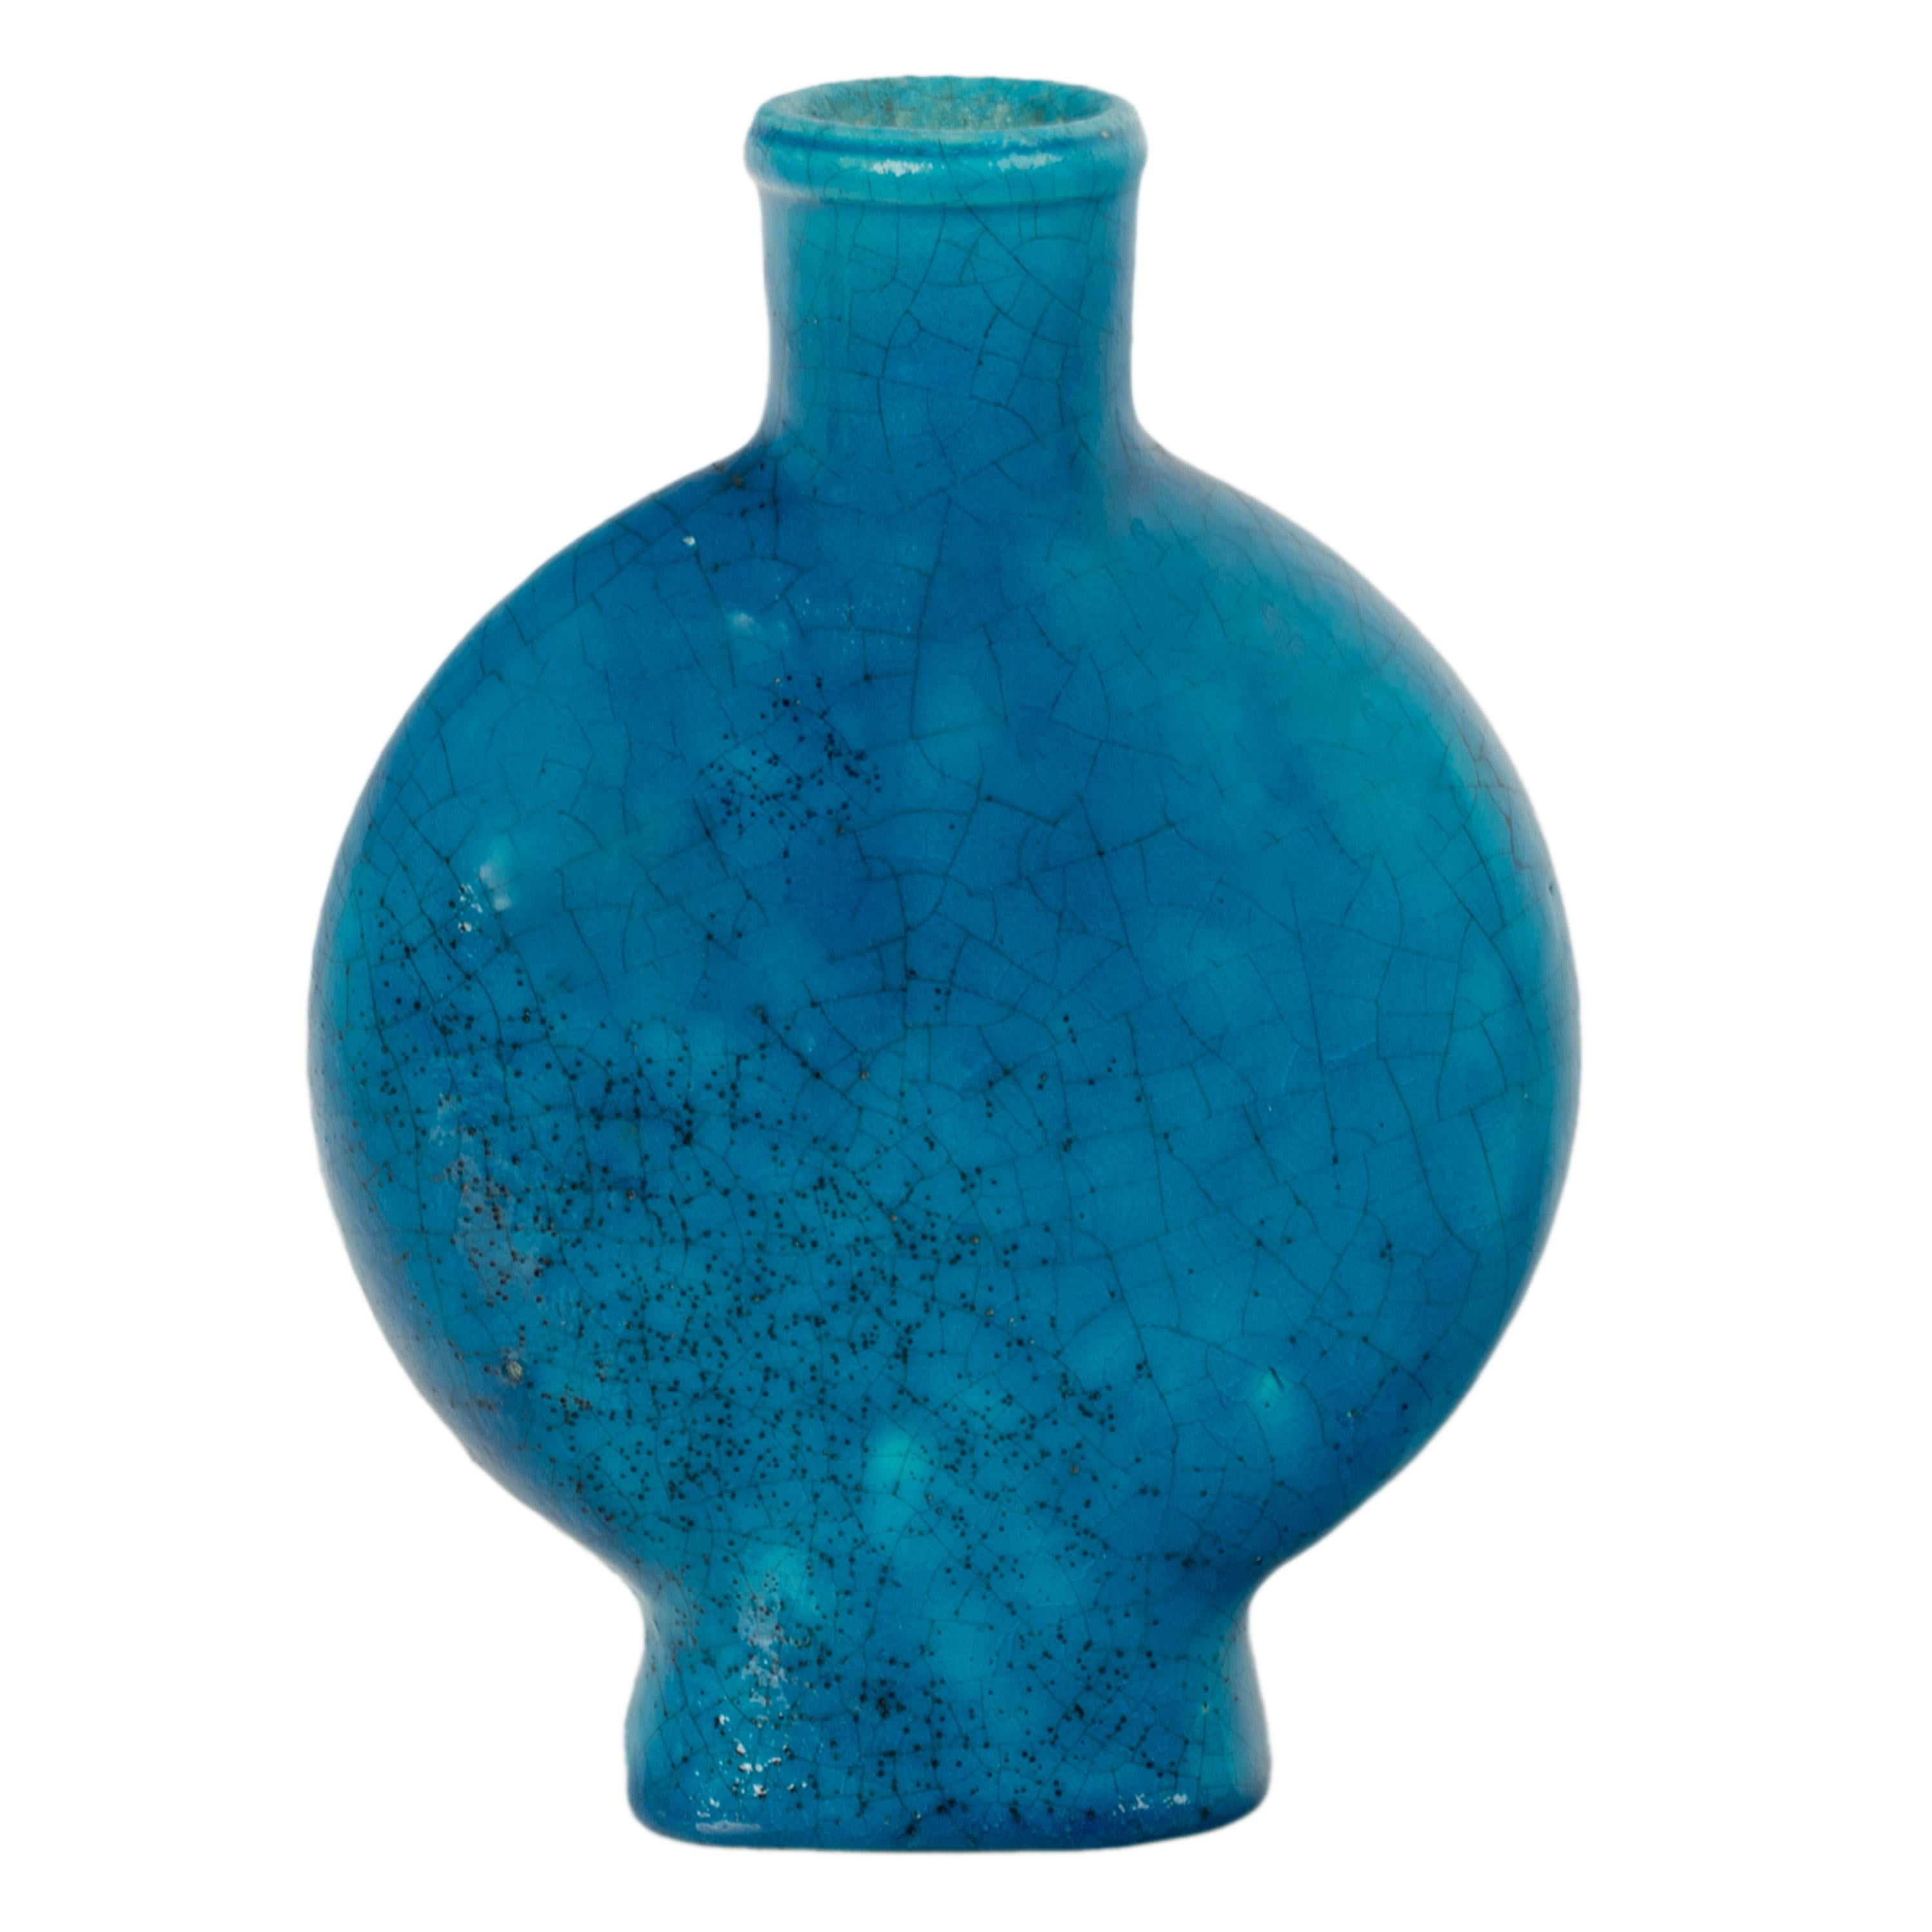 Antique French Art Deco Turquoise Blue Pottery Vase Edmond Lachenal Signed 1930 For Sale 1